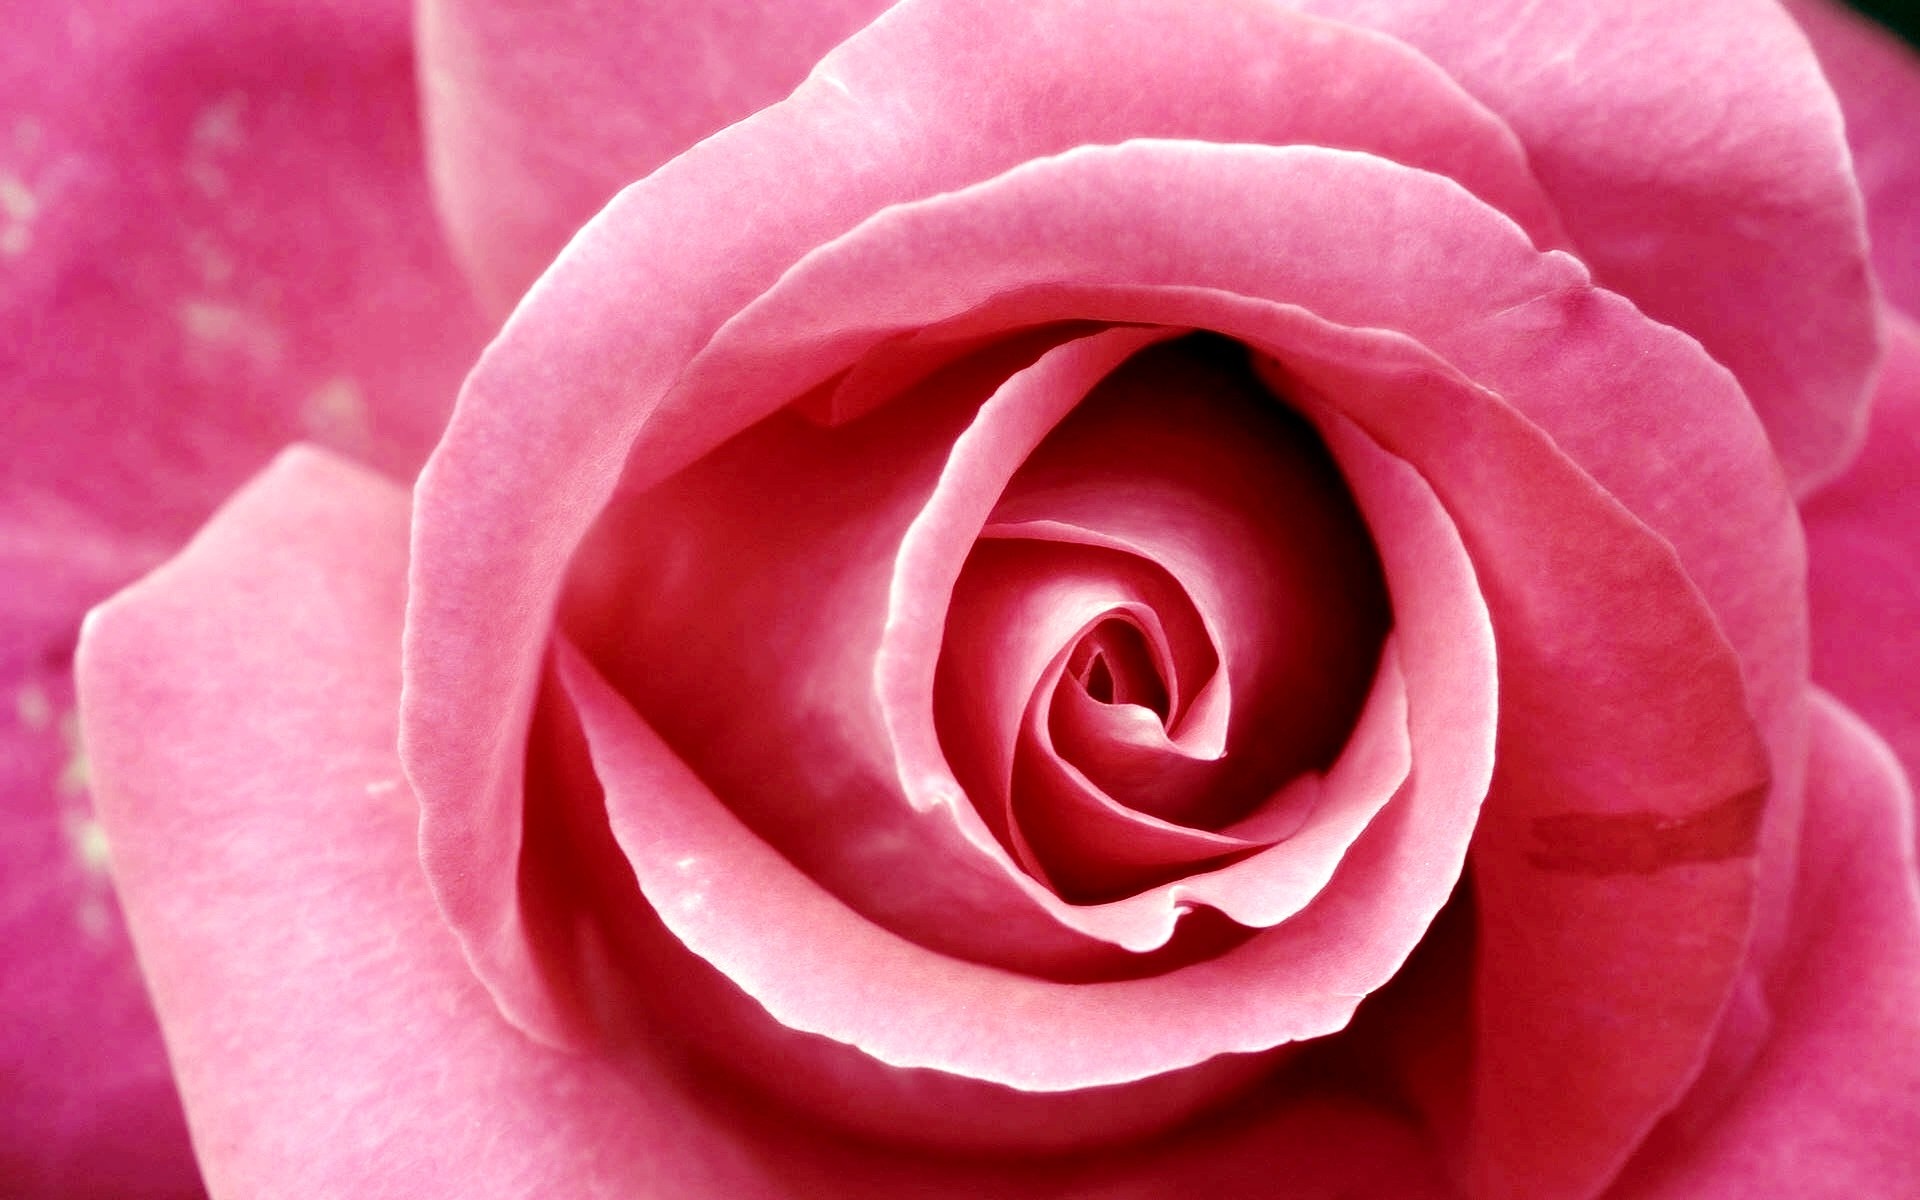 Pink Rose Pictures download free | PixelsTalk.Net